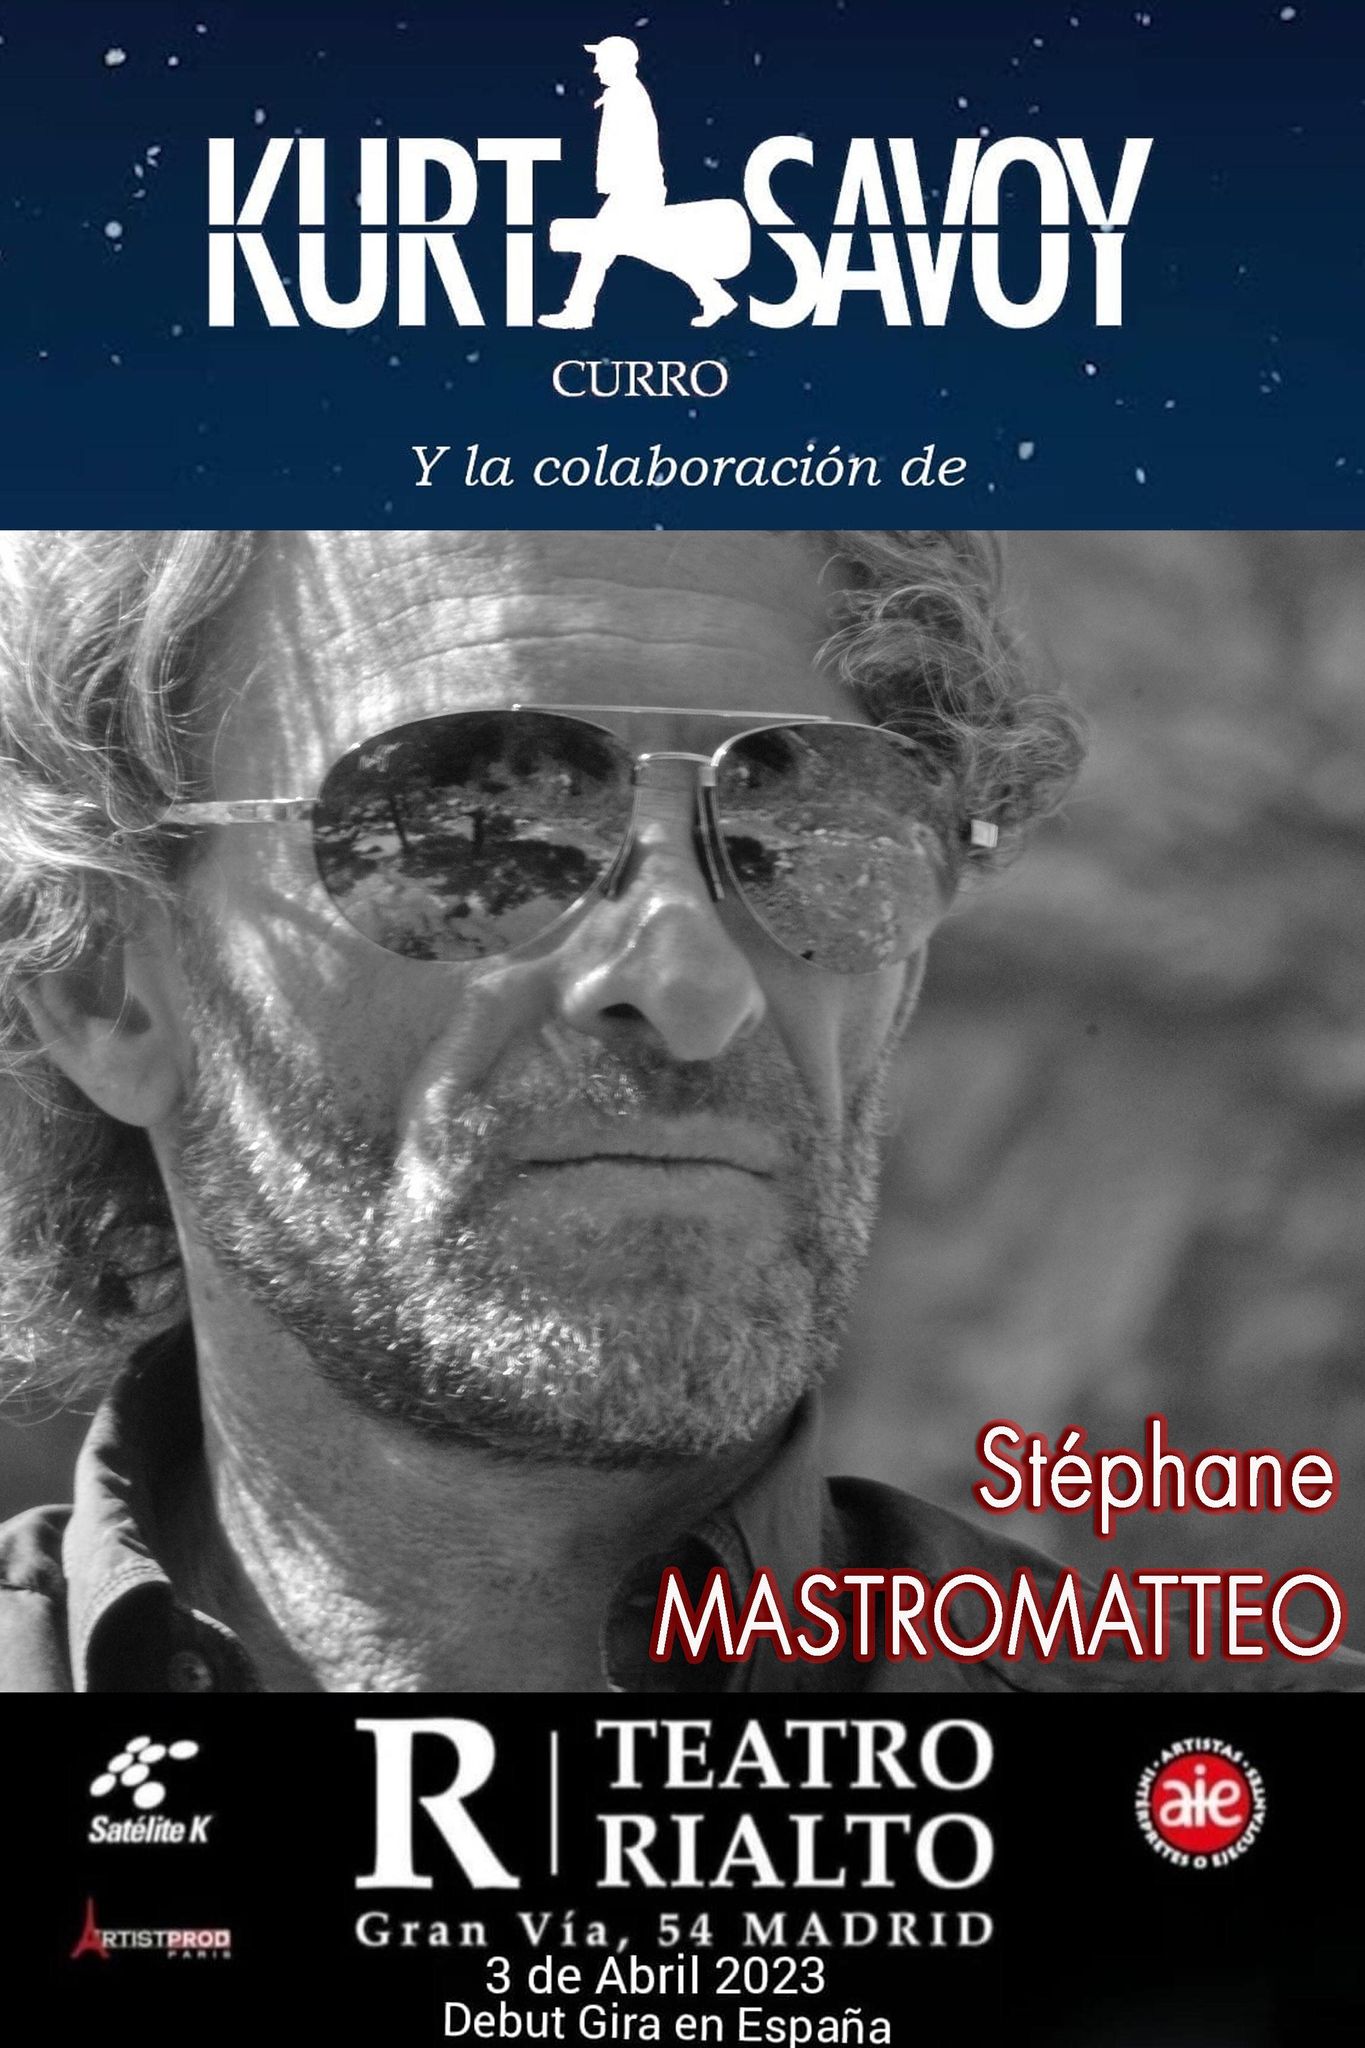 Stephane Mastromatteo